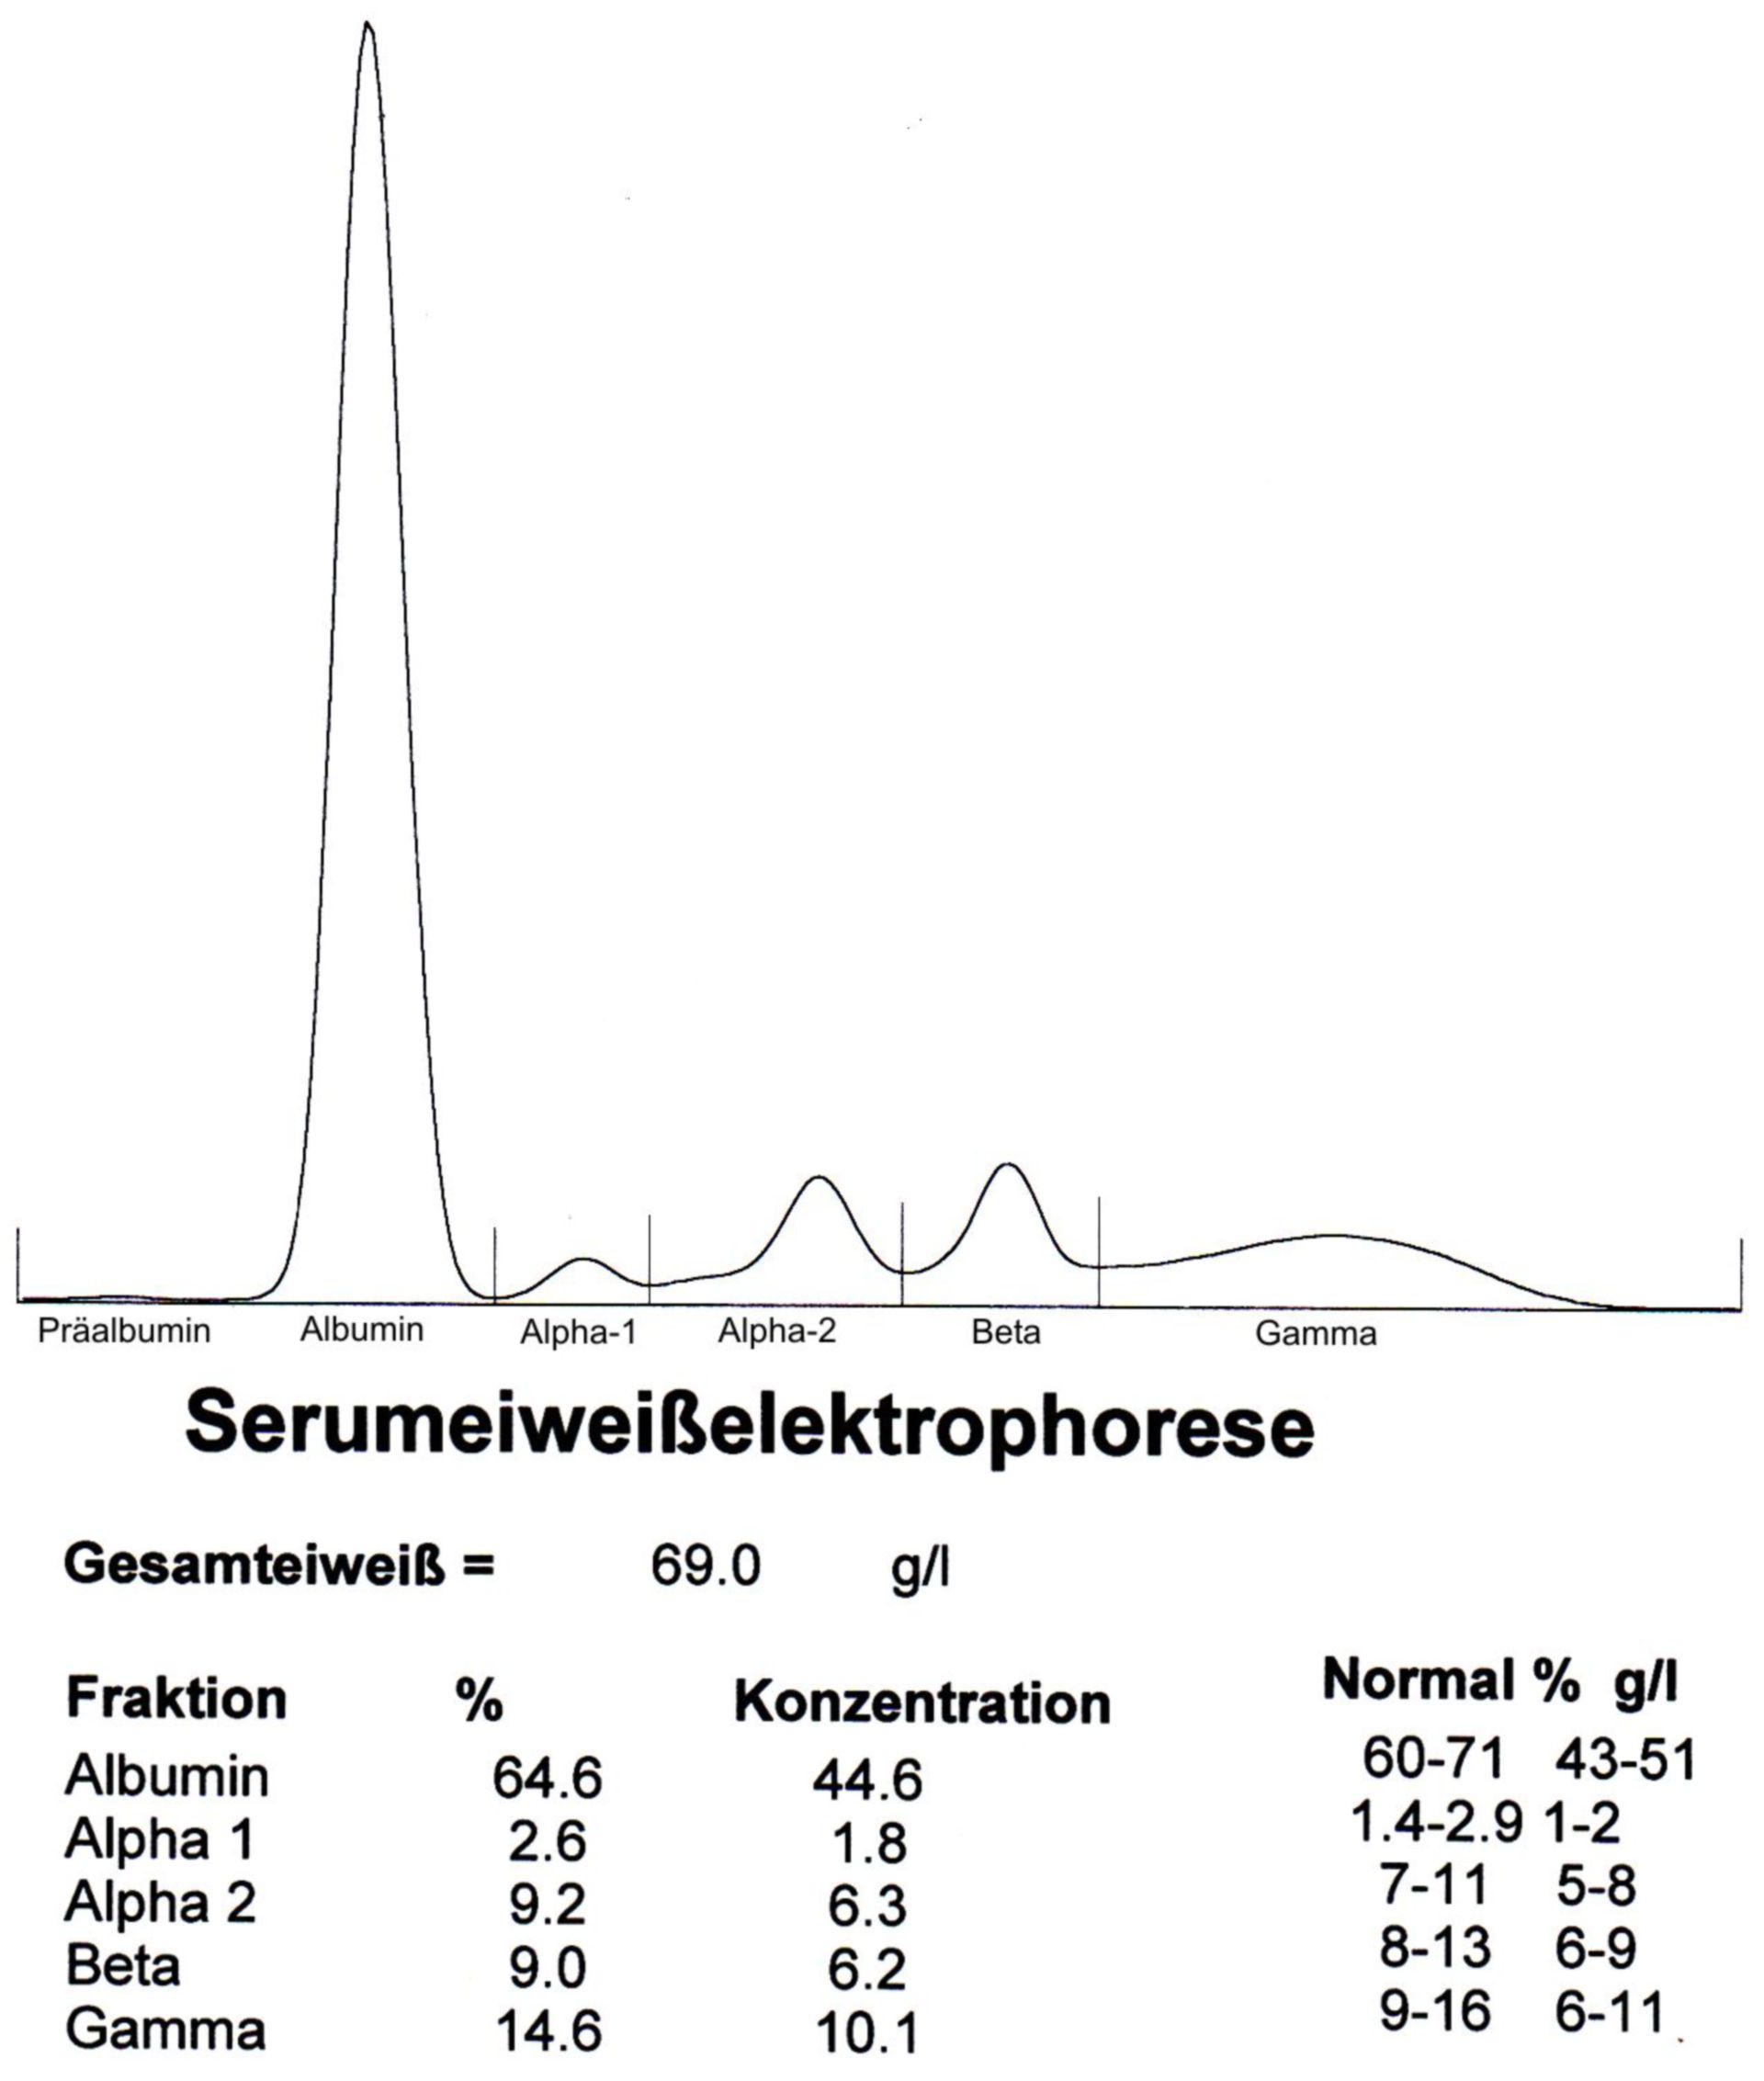 Normal serum protein electrophoresis